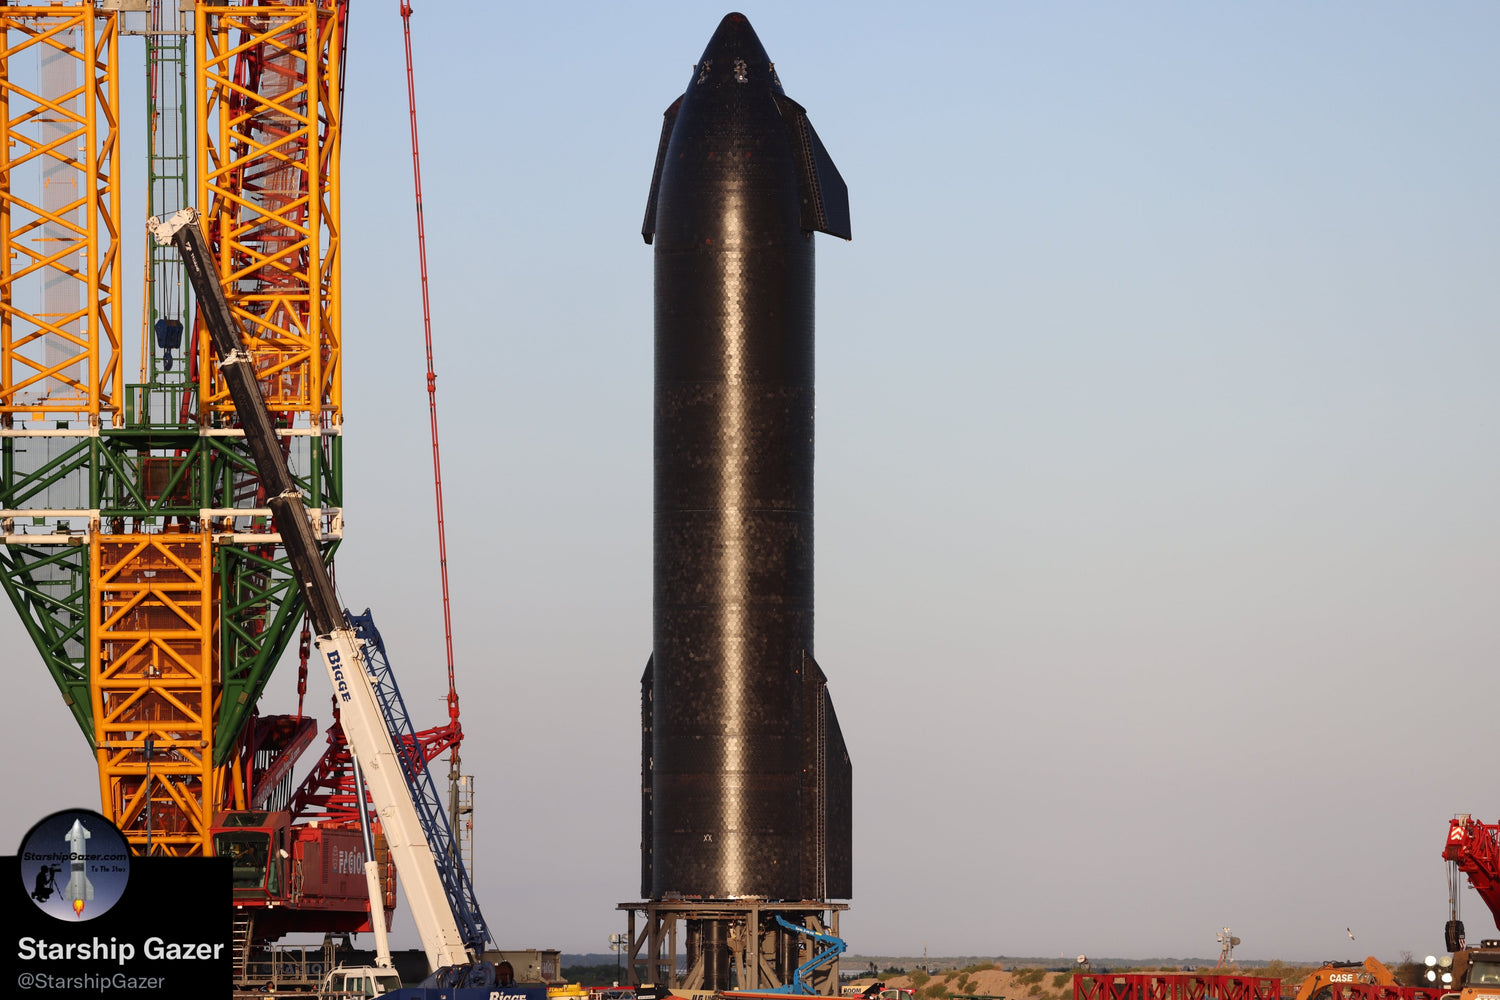 SpaceX Initiates Starship SN20 Testing To Prepare For Orbital Flight